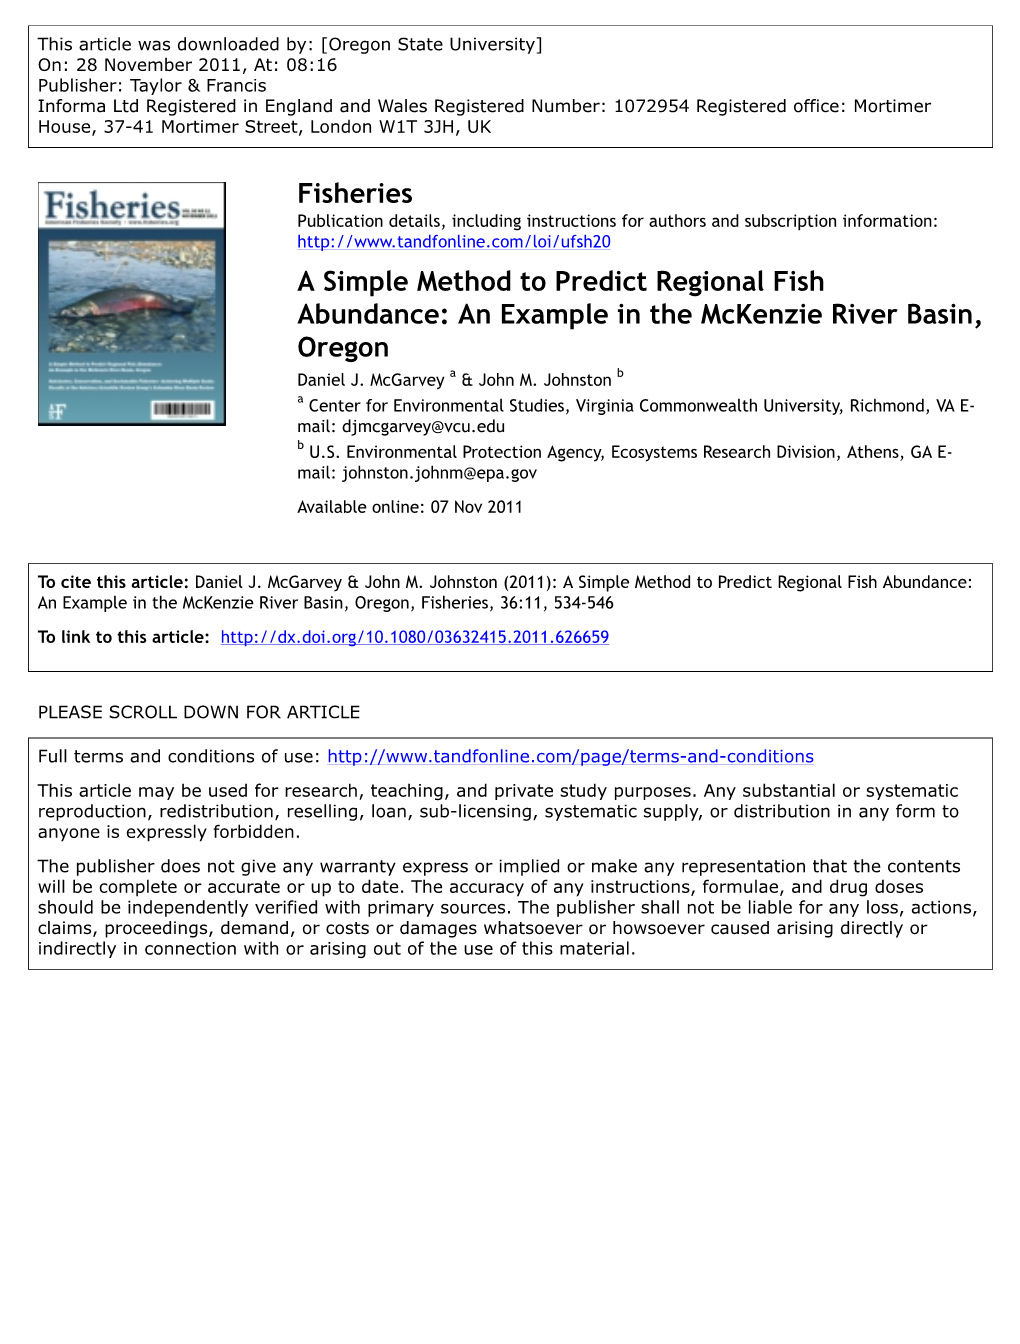 A Simple Method to Predict Regional Fish Abundance: an Example in the Mckenzie River Basin, Oregon Daniel J